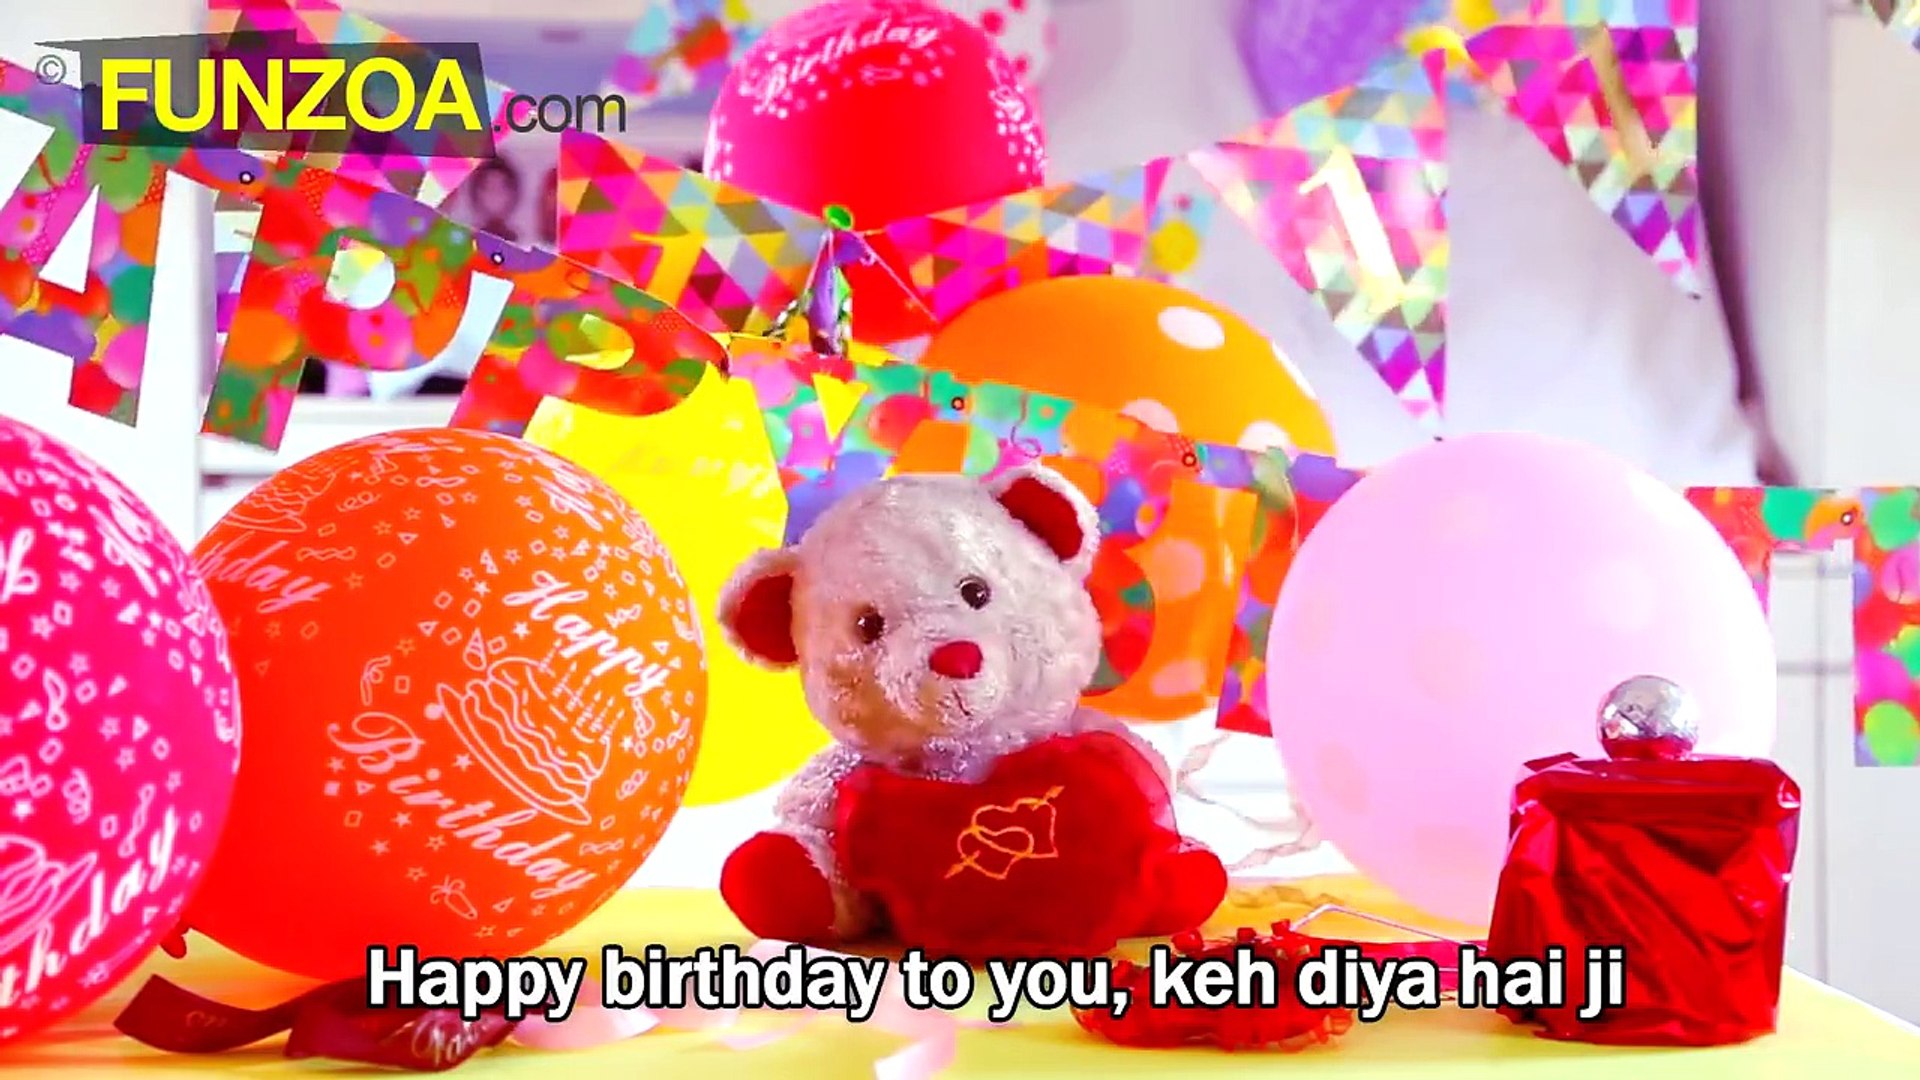 Funny Hindi Birthday Song Funzoa Mimi Teddy - Dailymotion Video